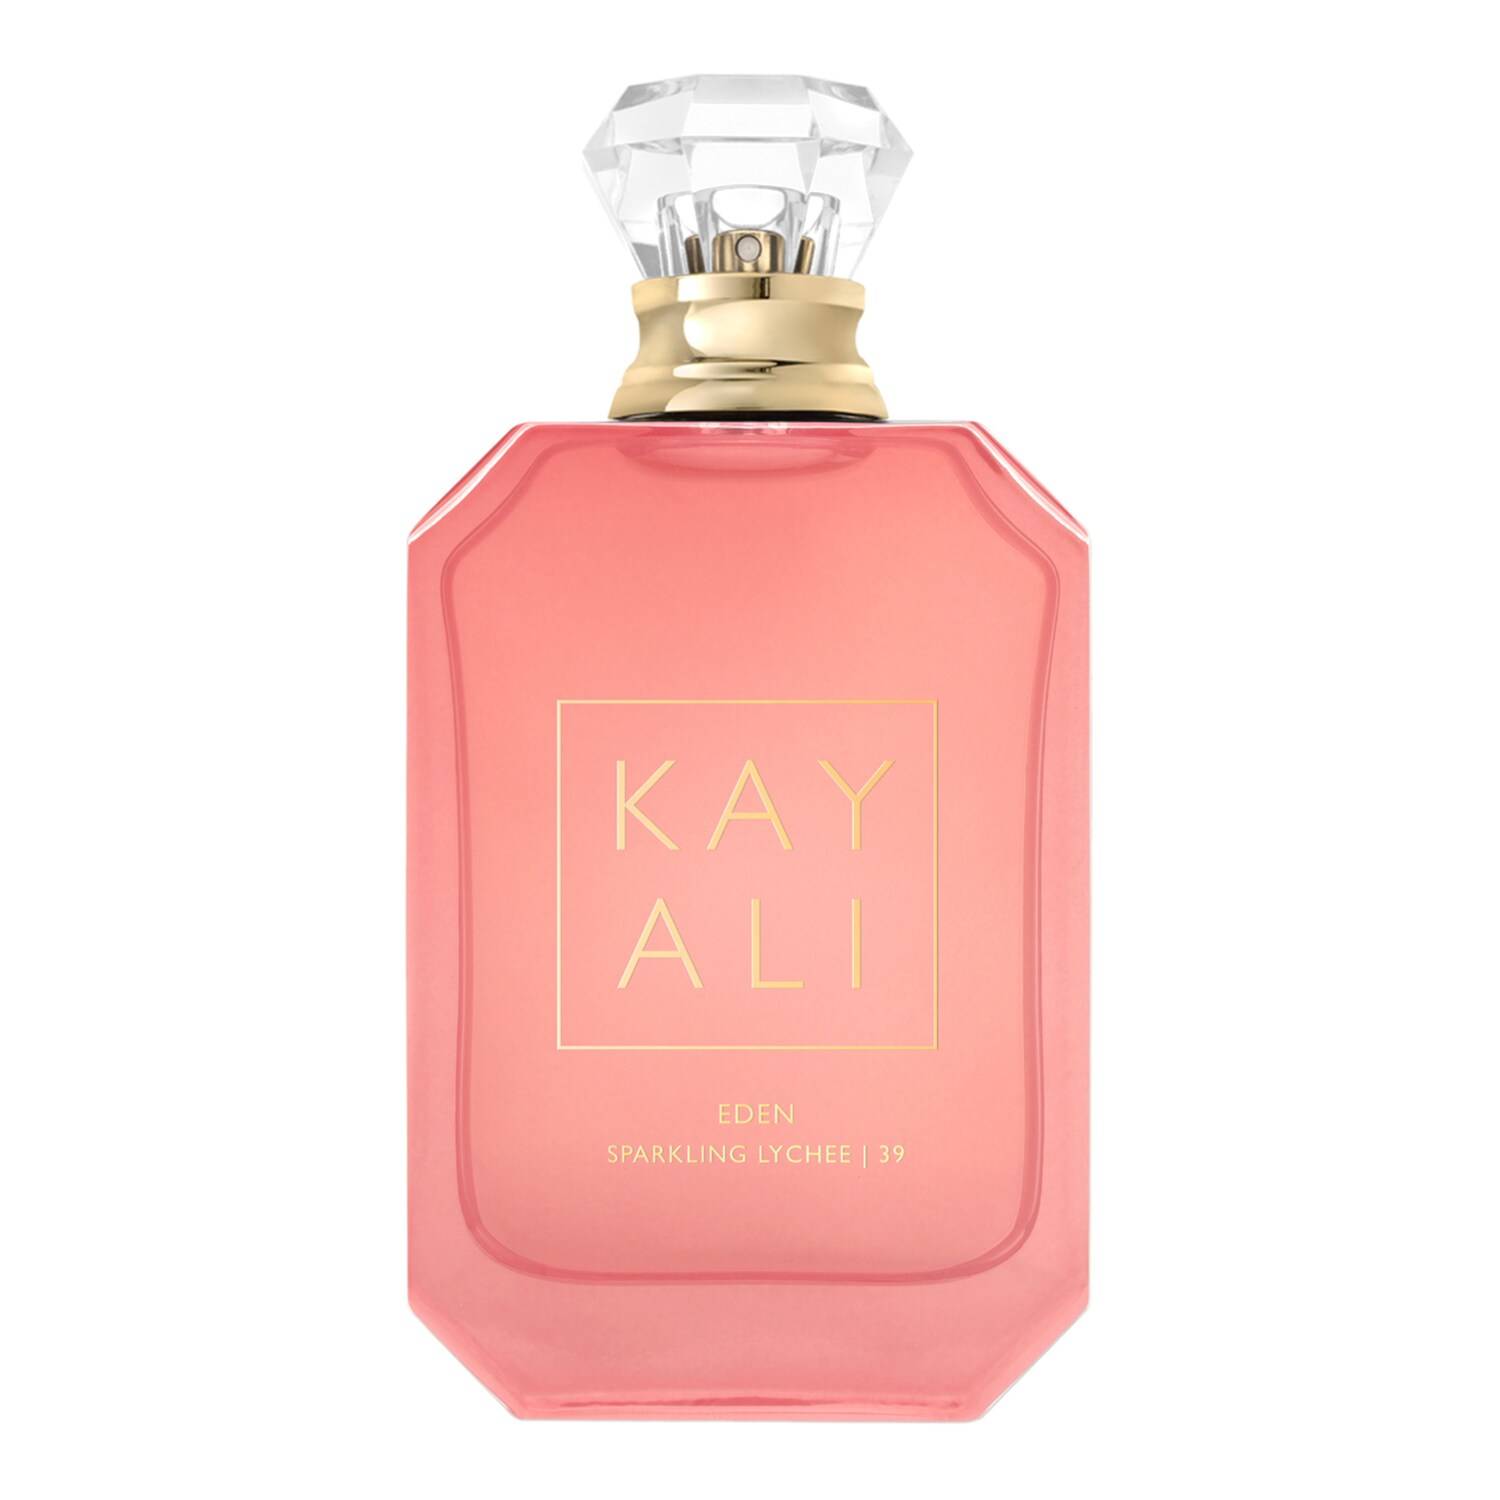 KAYALI Eden Sparkling Lychee | 39 Eau de Parfum 50ml